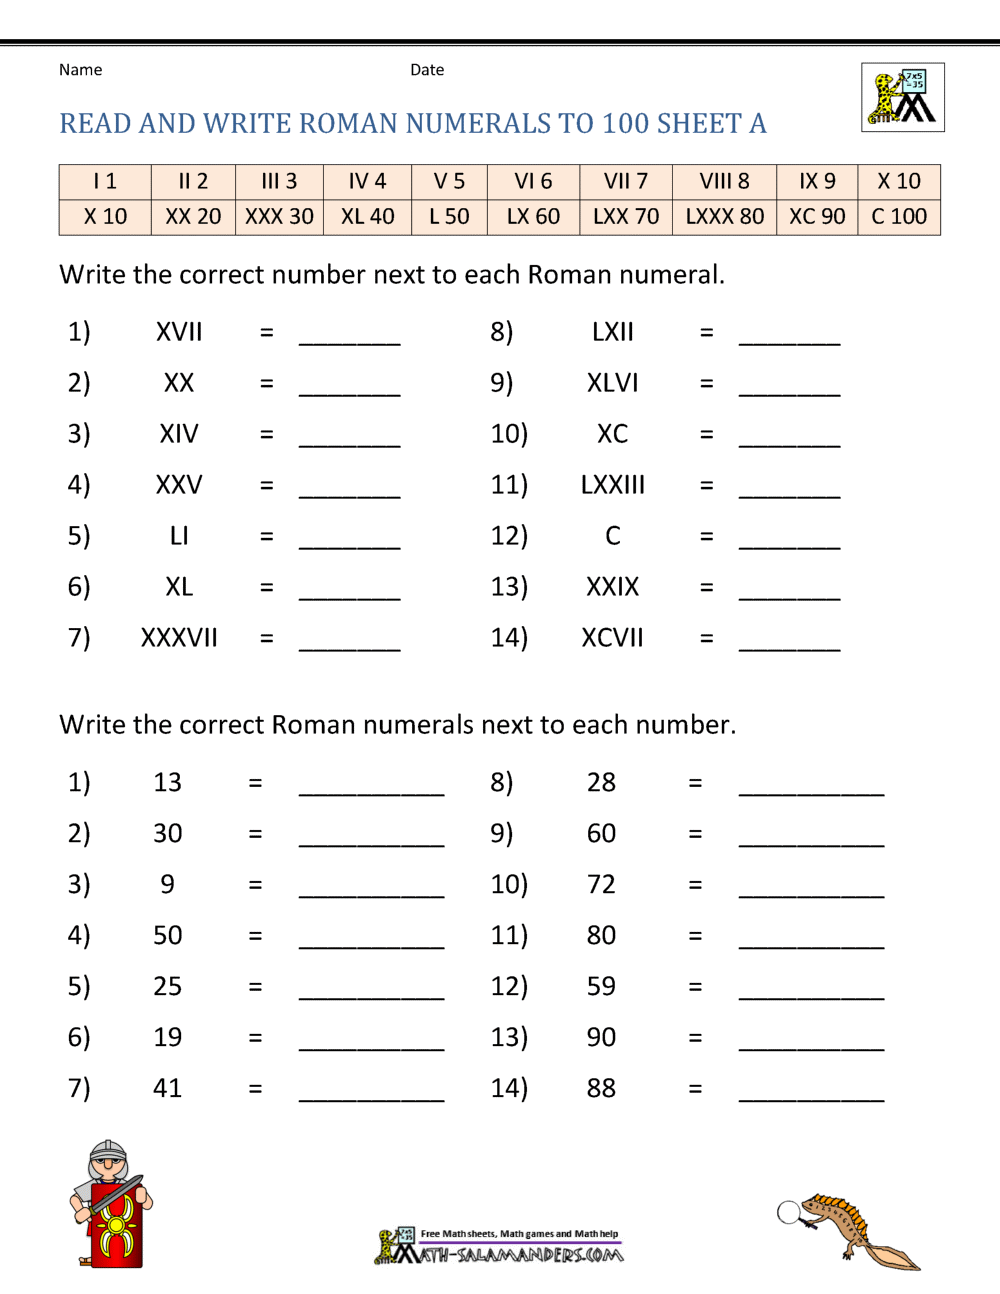 Roman Numerals Worksheet For Roman Numerals Worksheet Pdf